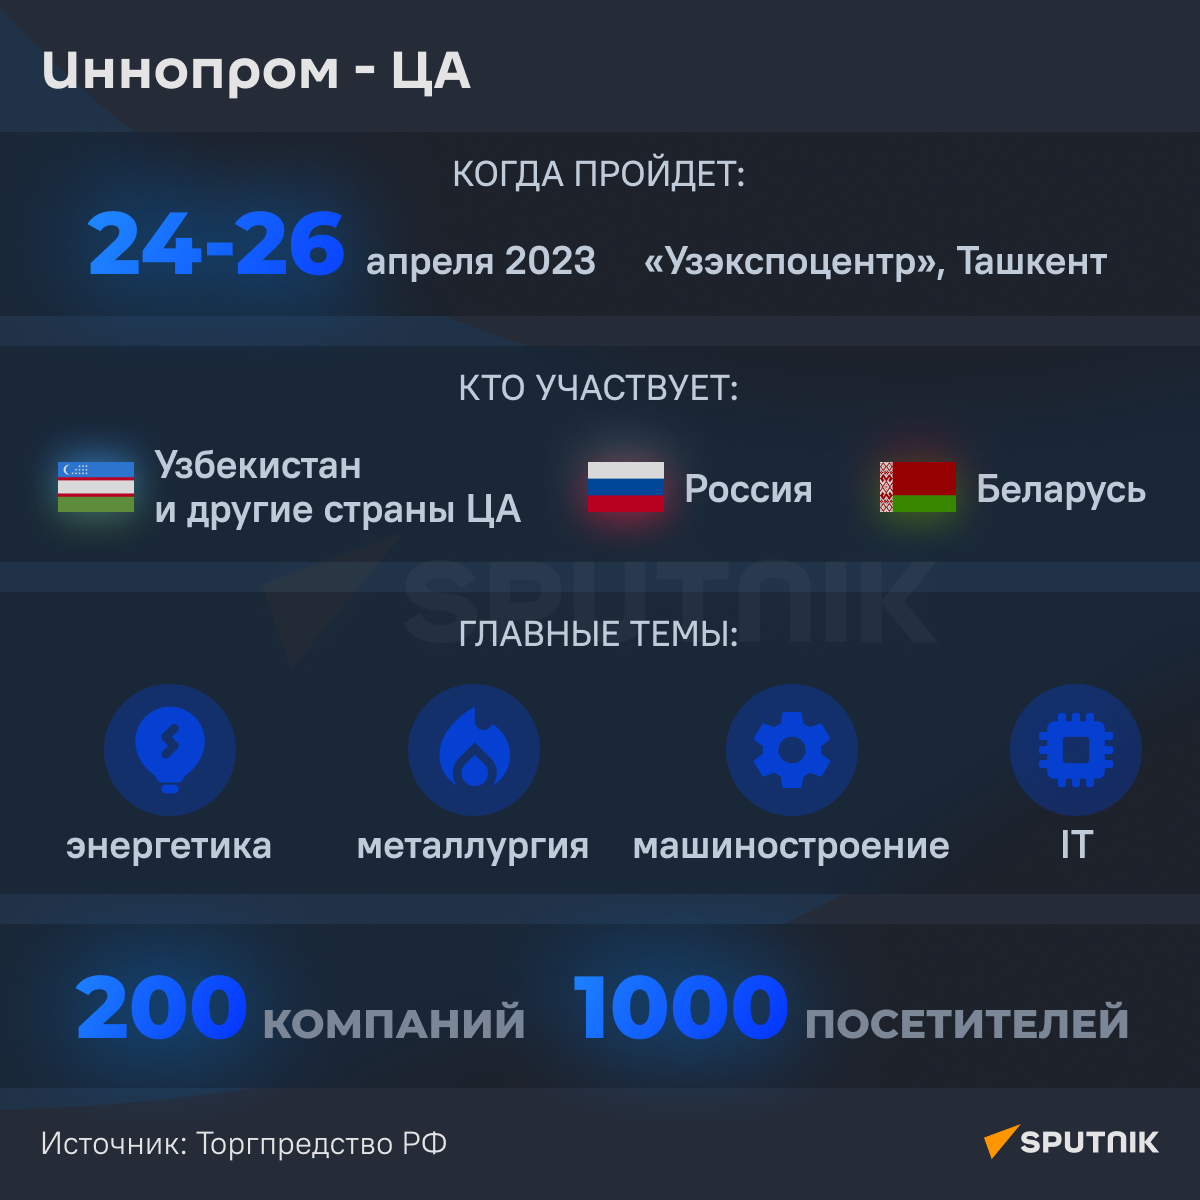 Иннопром 2023 инфографика - Sputnik Узбекистан